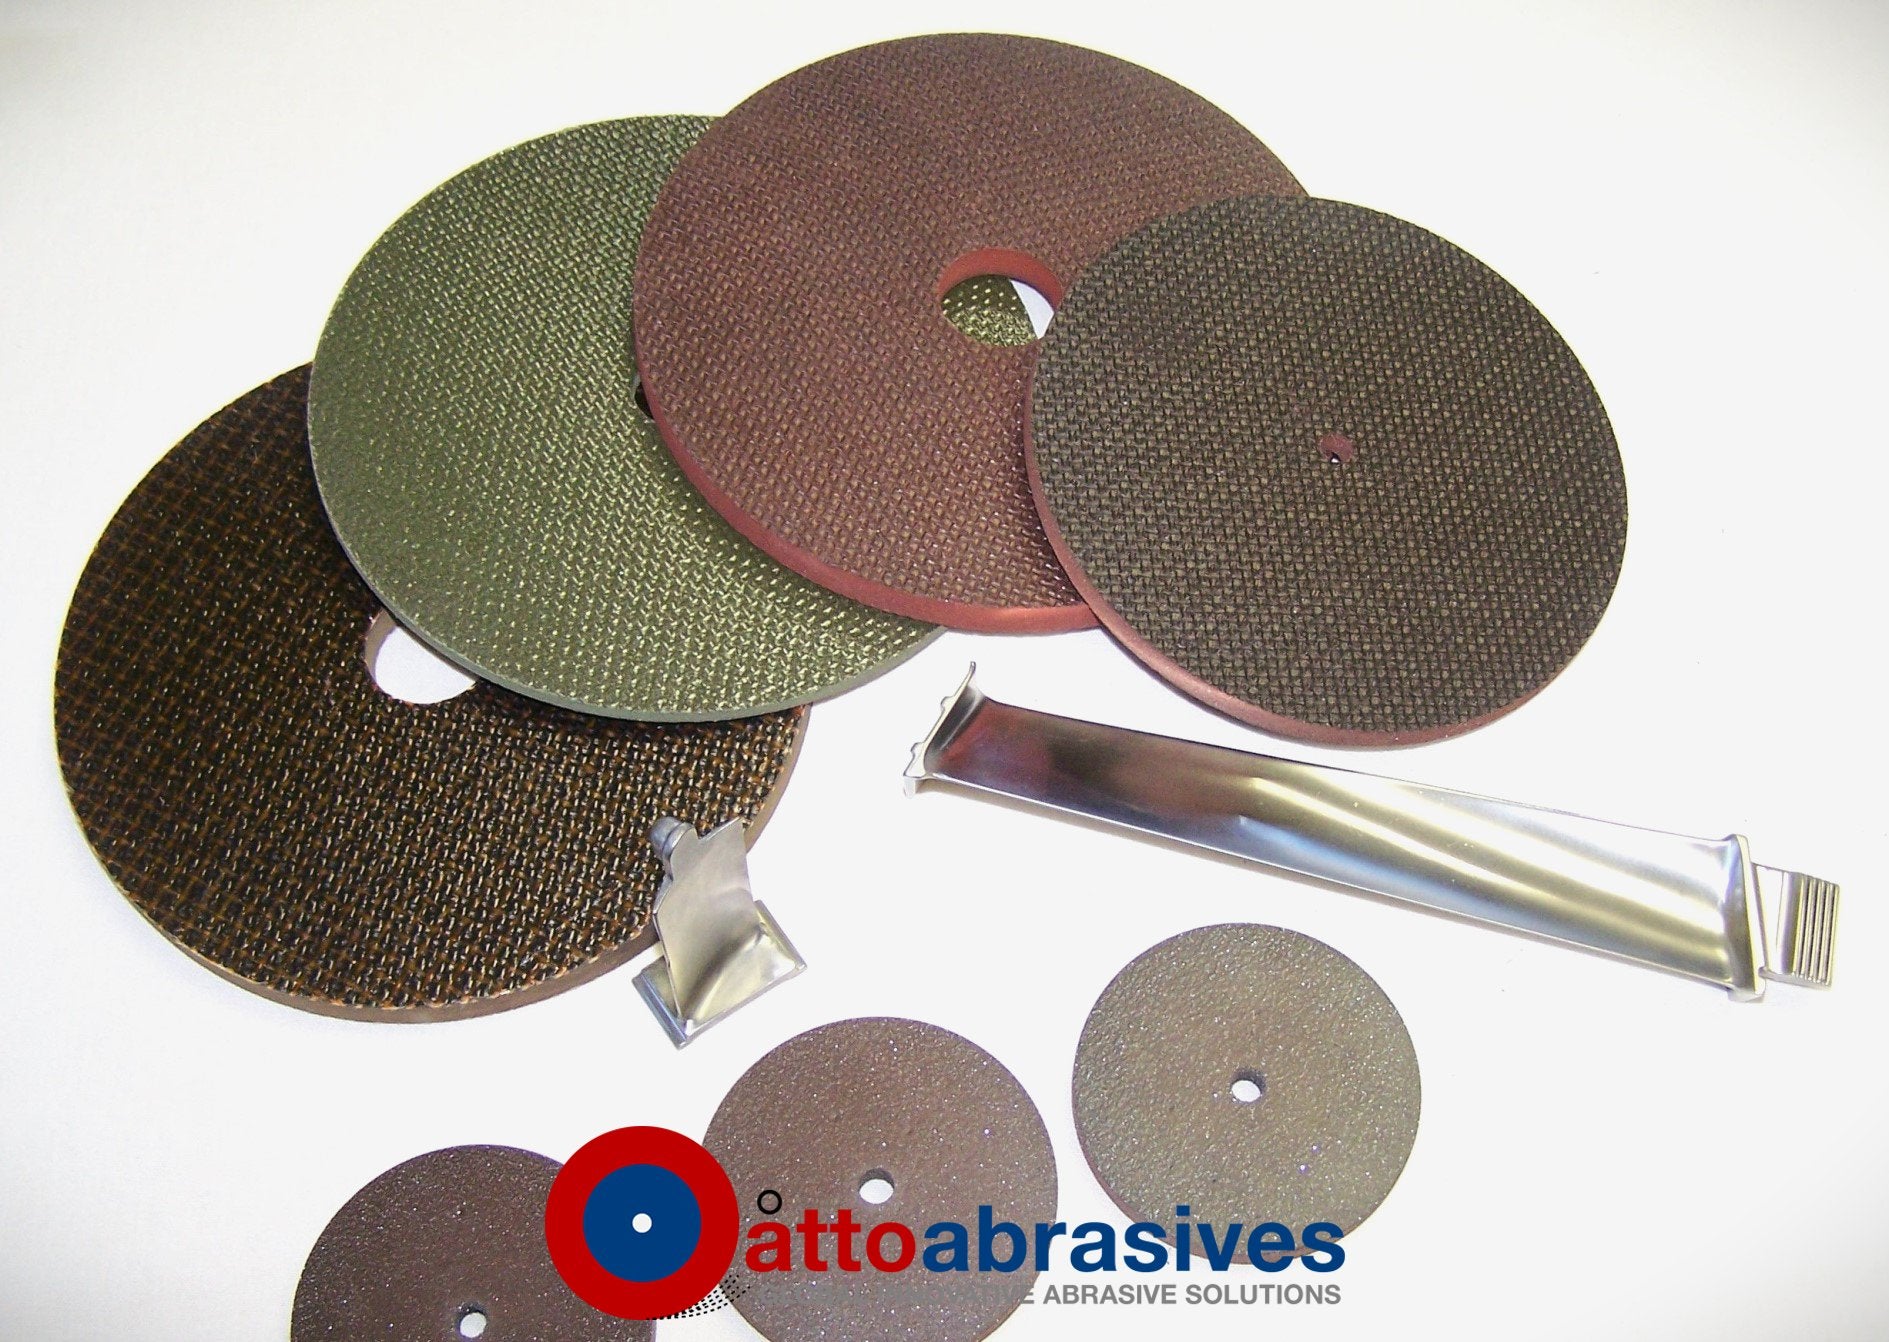 Polishing Wheels – Atto Abrasives